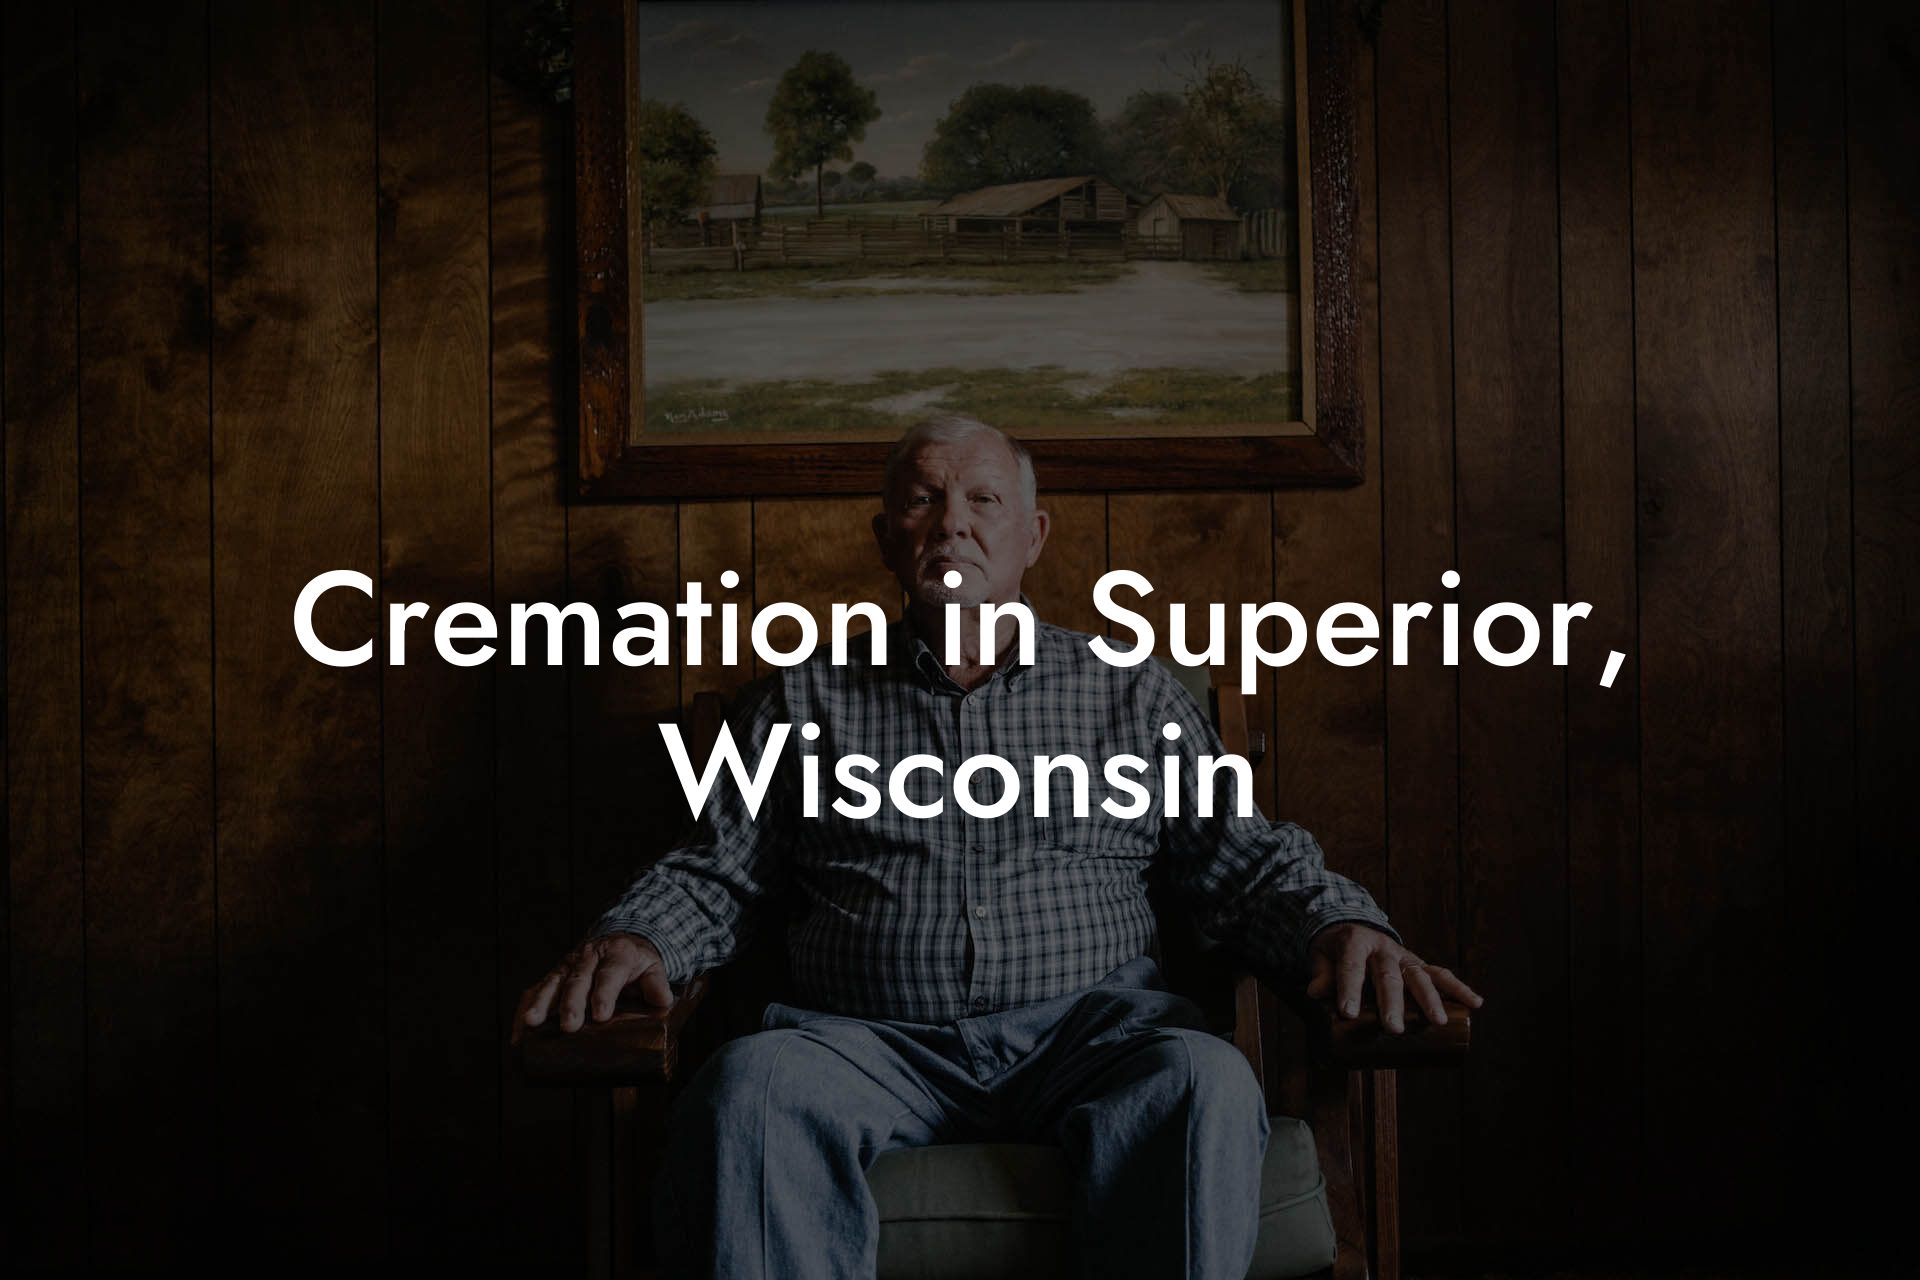 Cremation in Superior, Wisconsin